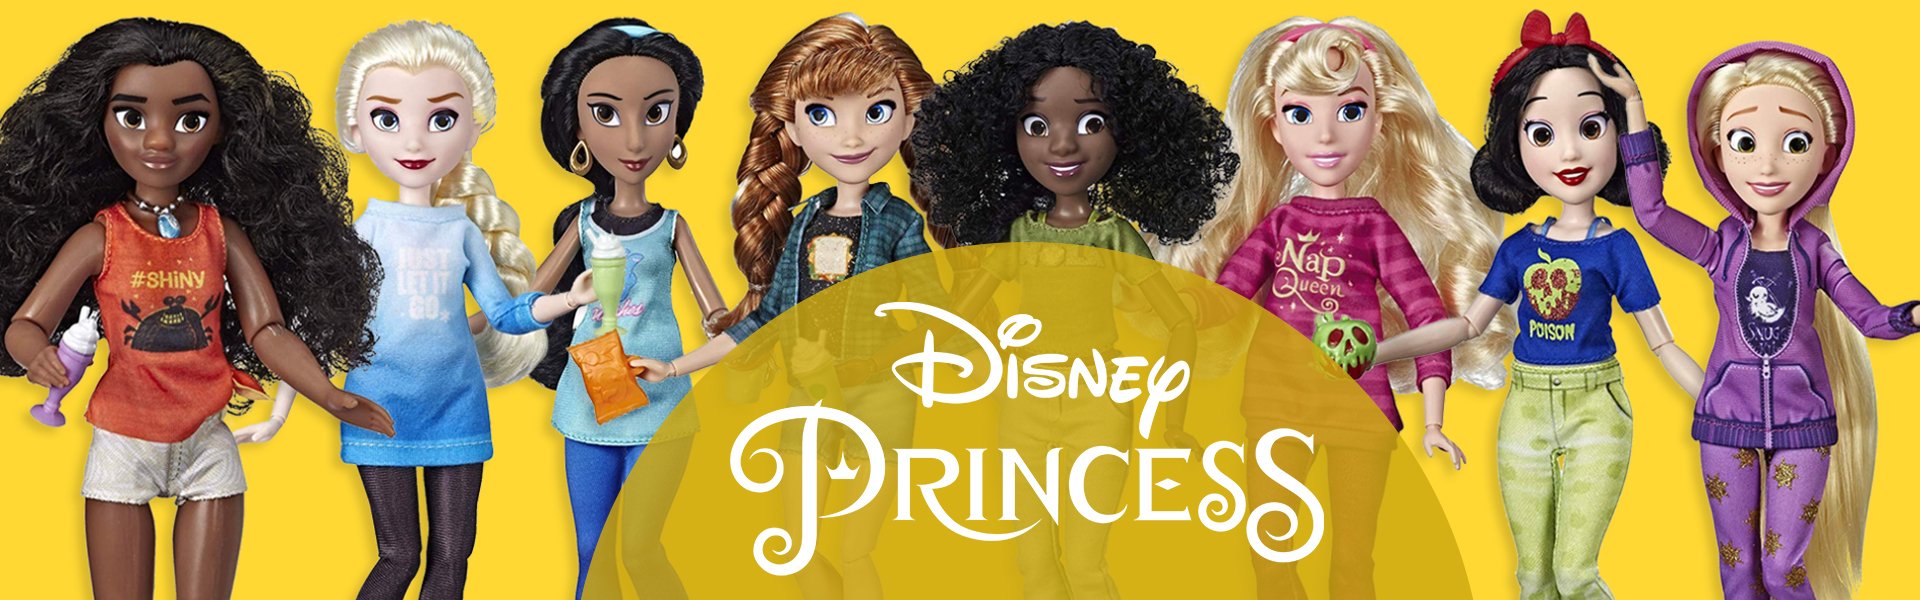 Lumememm Olaf Frozen Hasbro Disney Princess